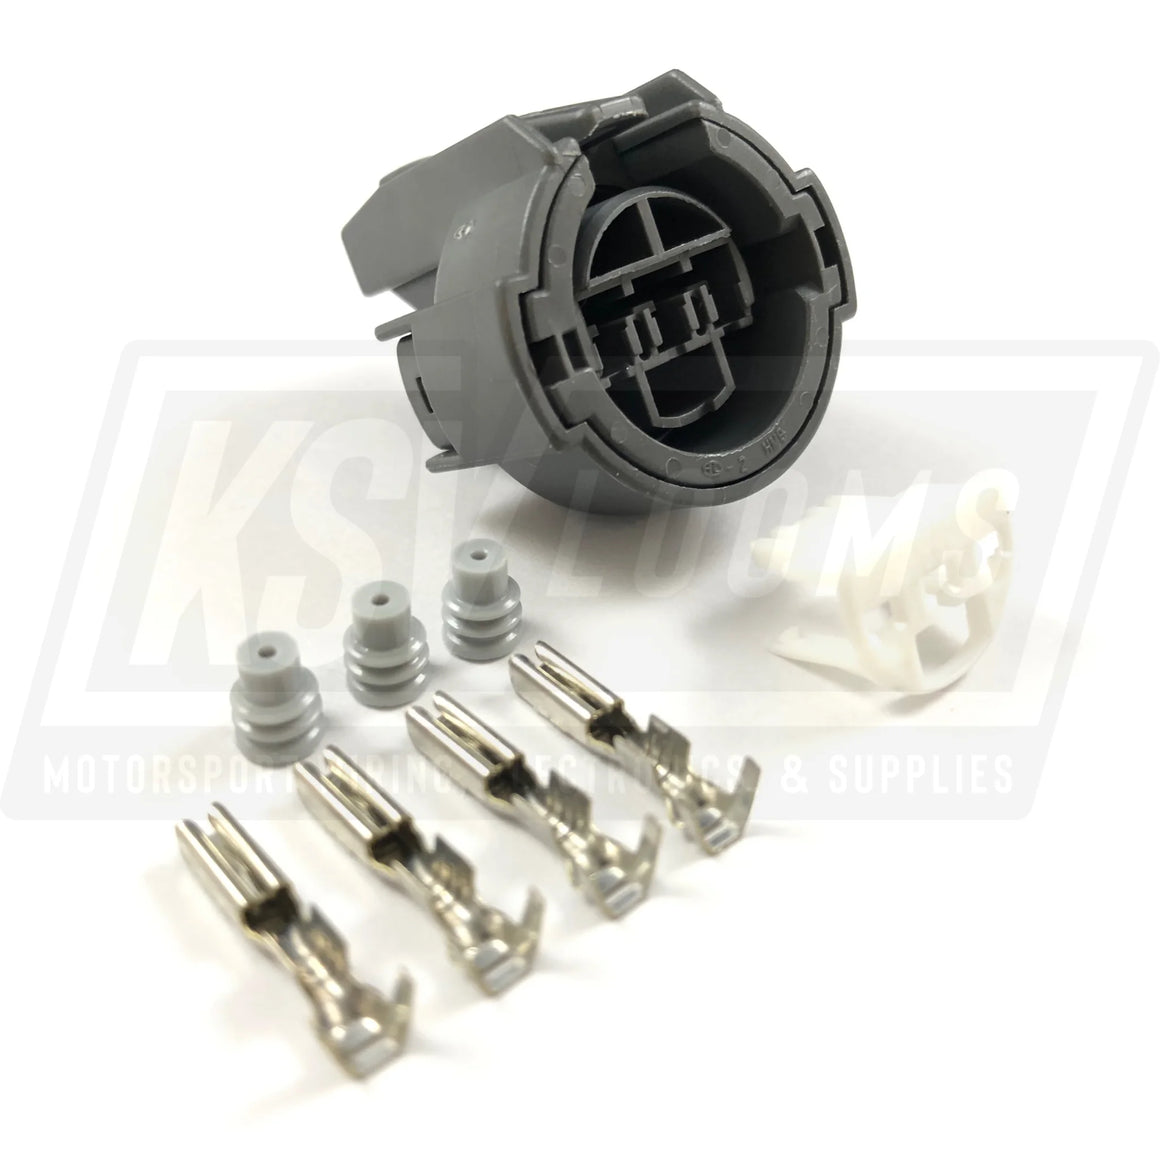 3-Way Connector Kit For Honda Tps Throttle Position Sensor 16400-P0A-A11 (22-16 Awg)